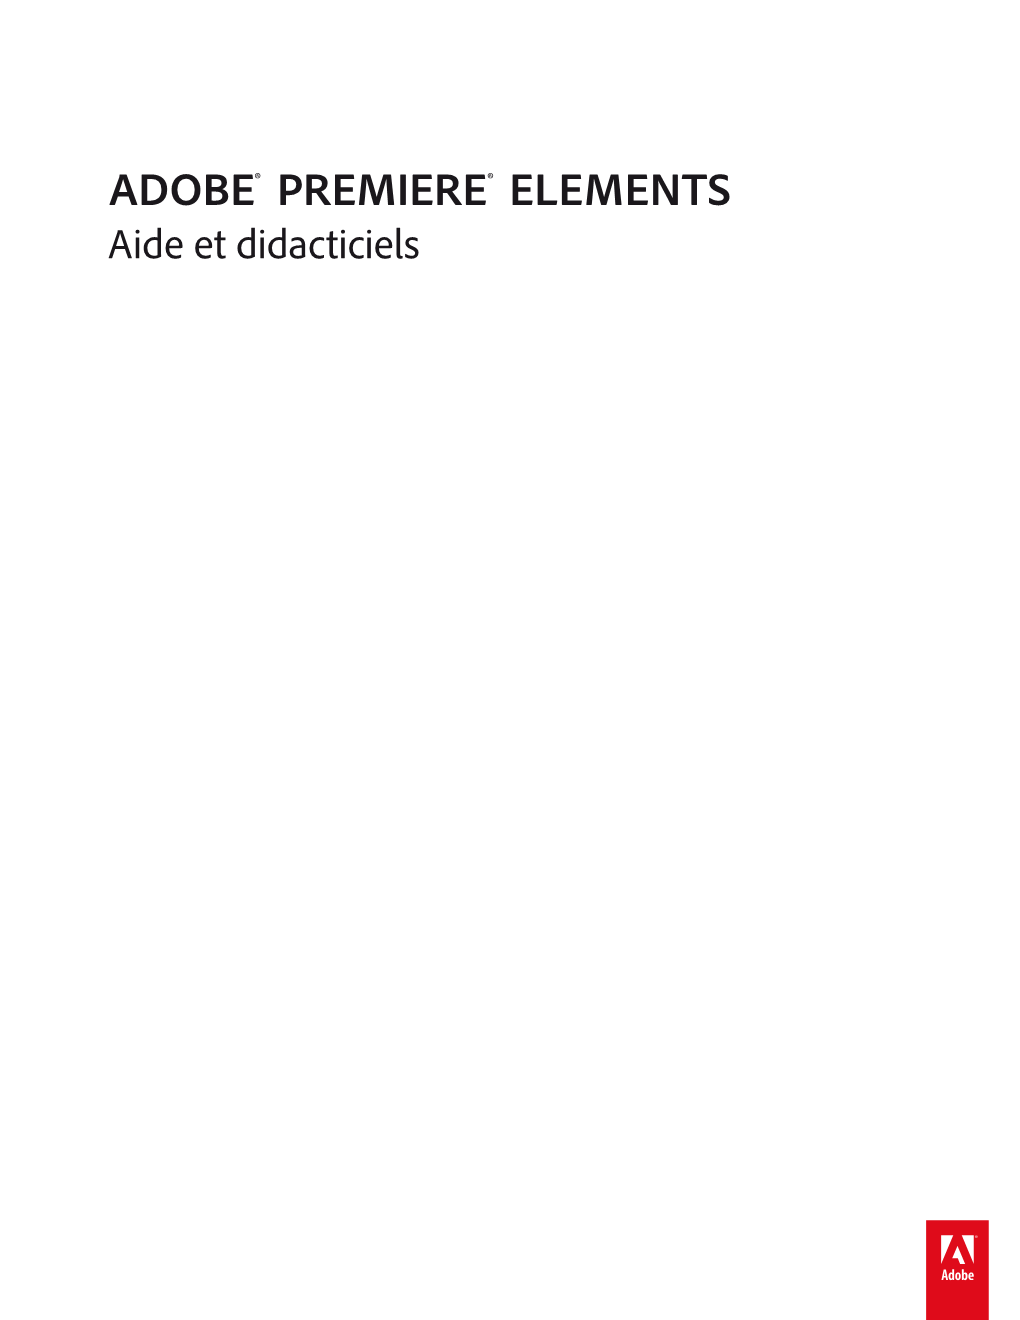 Adobe Premiere Elements 13